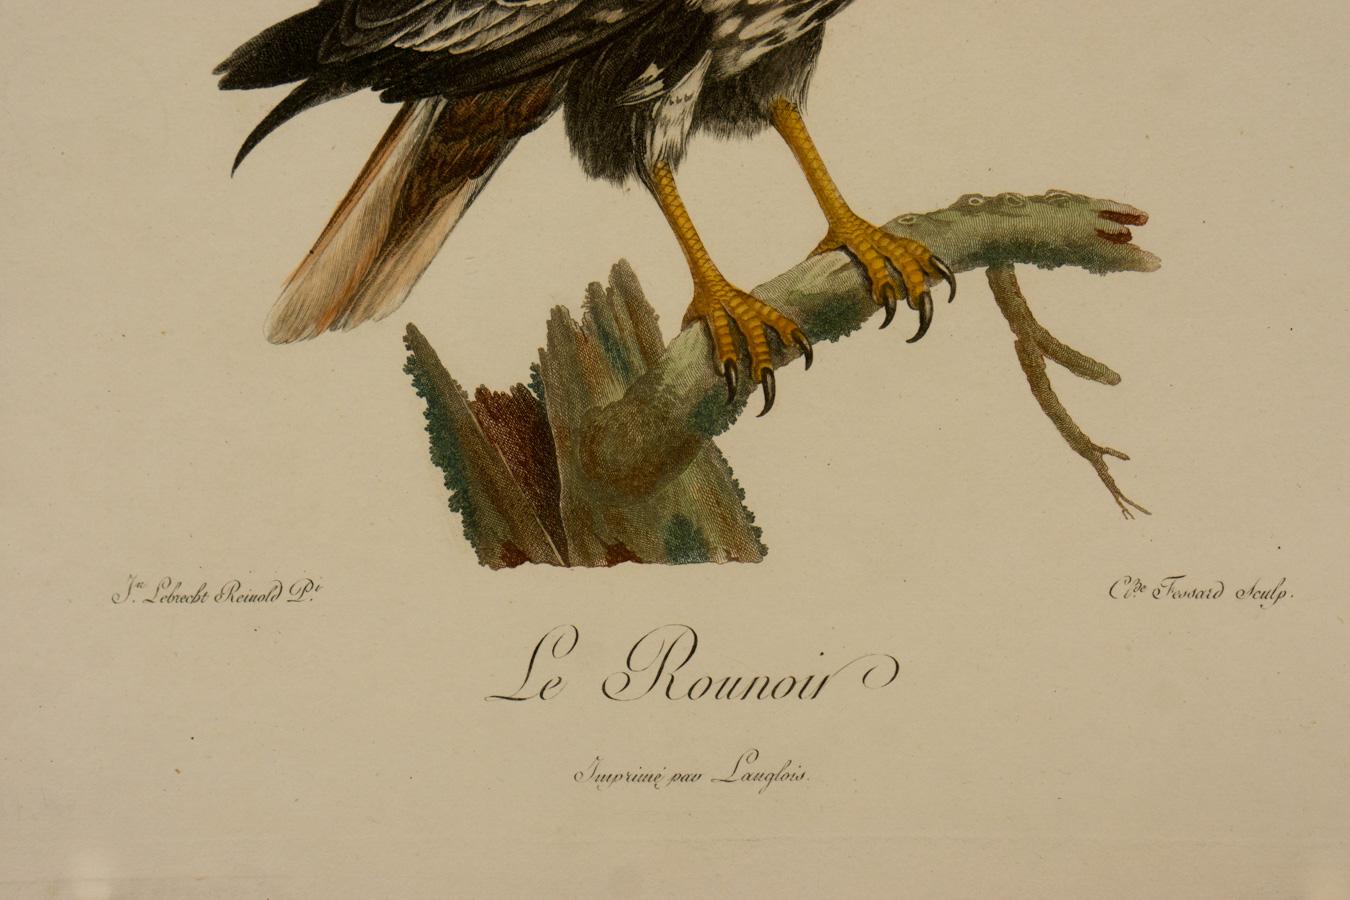 Le Rounnoir - Print by Johann Lebrecht Reinold